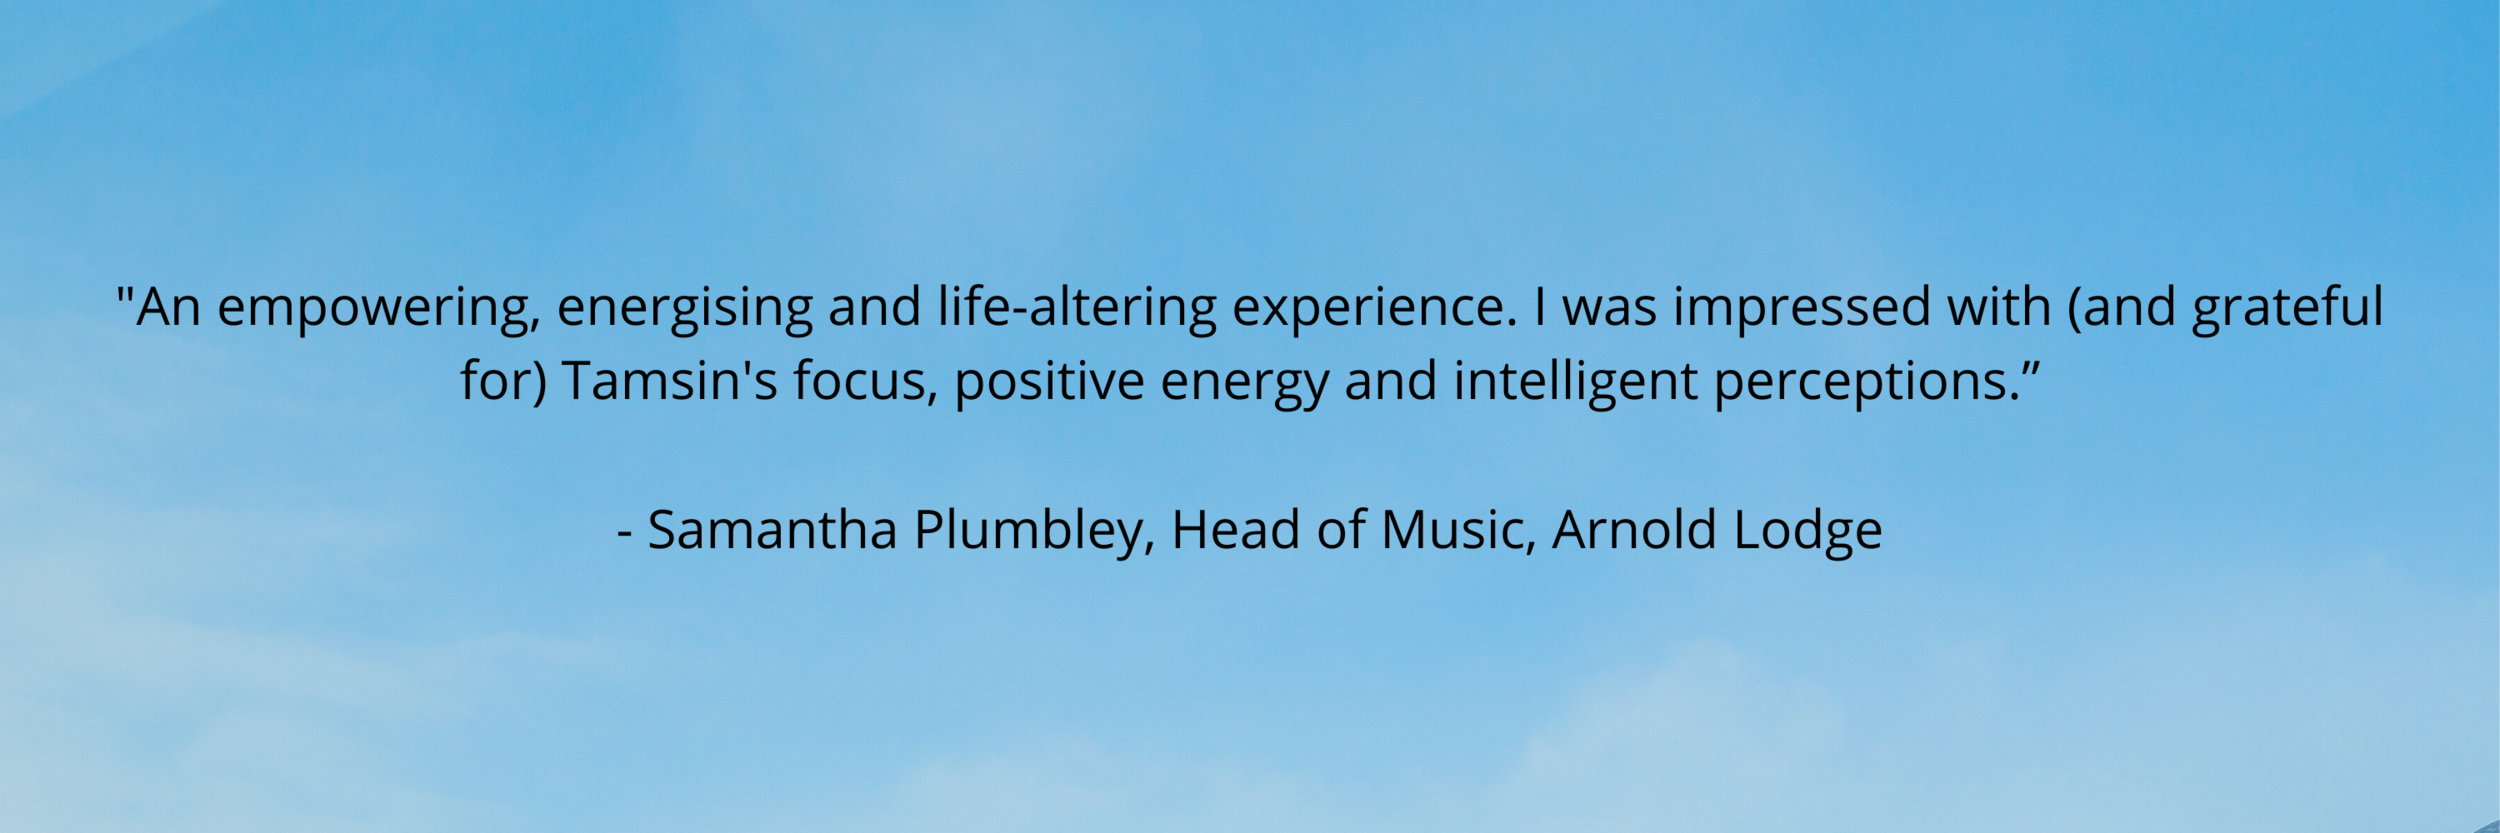 - Samantha Plumbley, Head of Music, Arnold Lodge.png